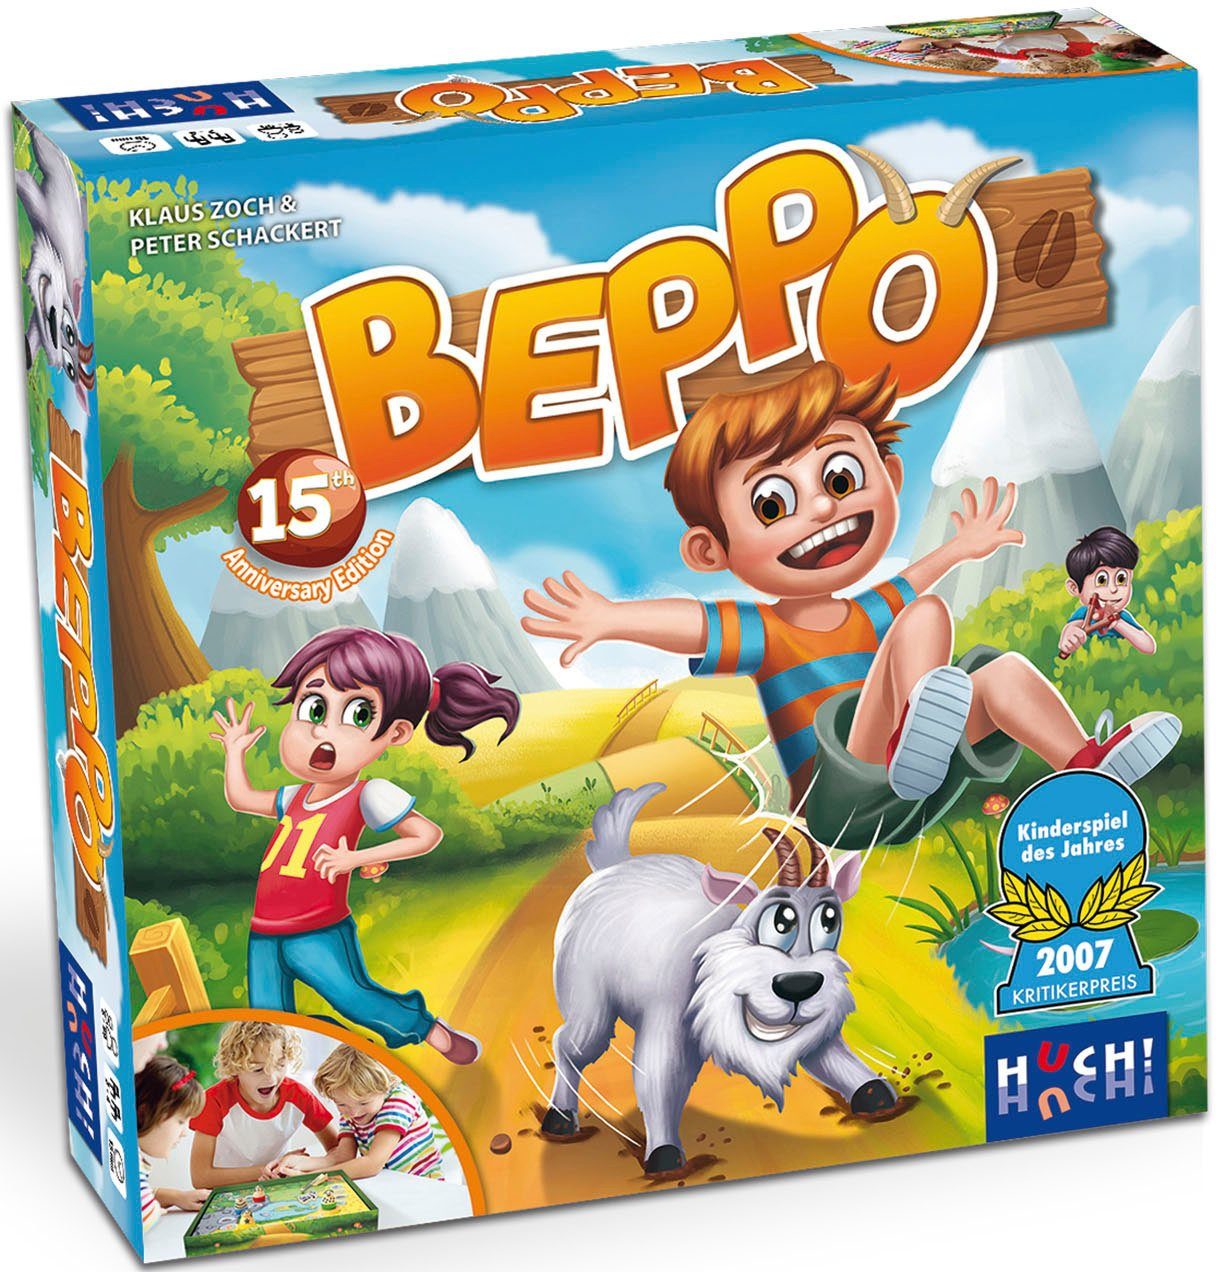 Kinderspiel Spiel, Germany Beppo, Made in Huch!